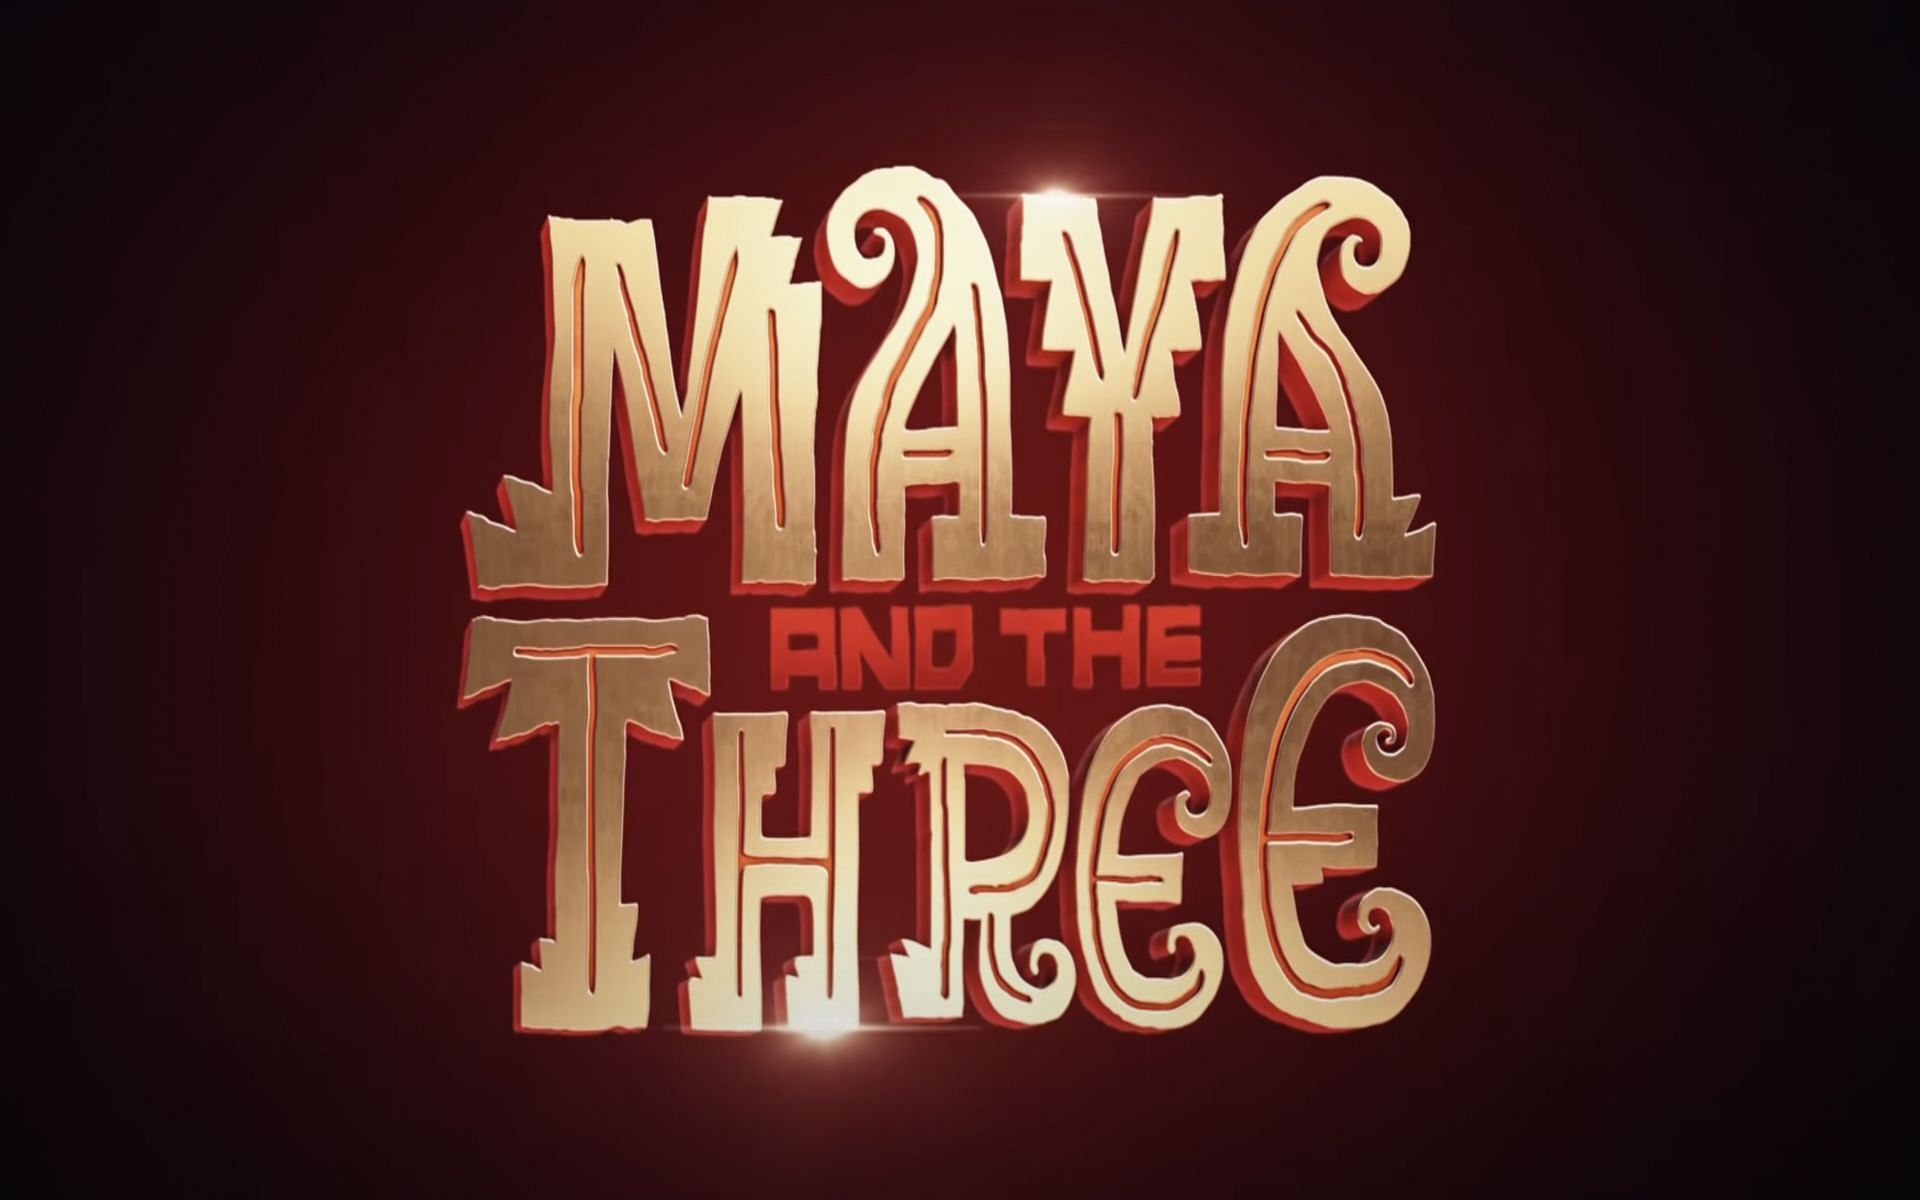 Maya and the three cast